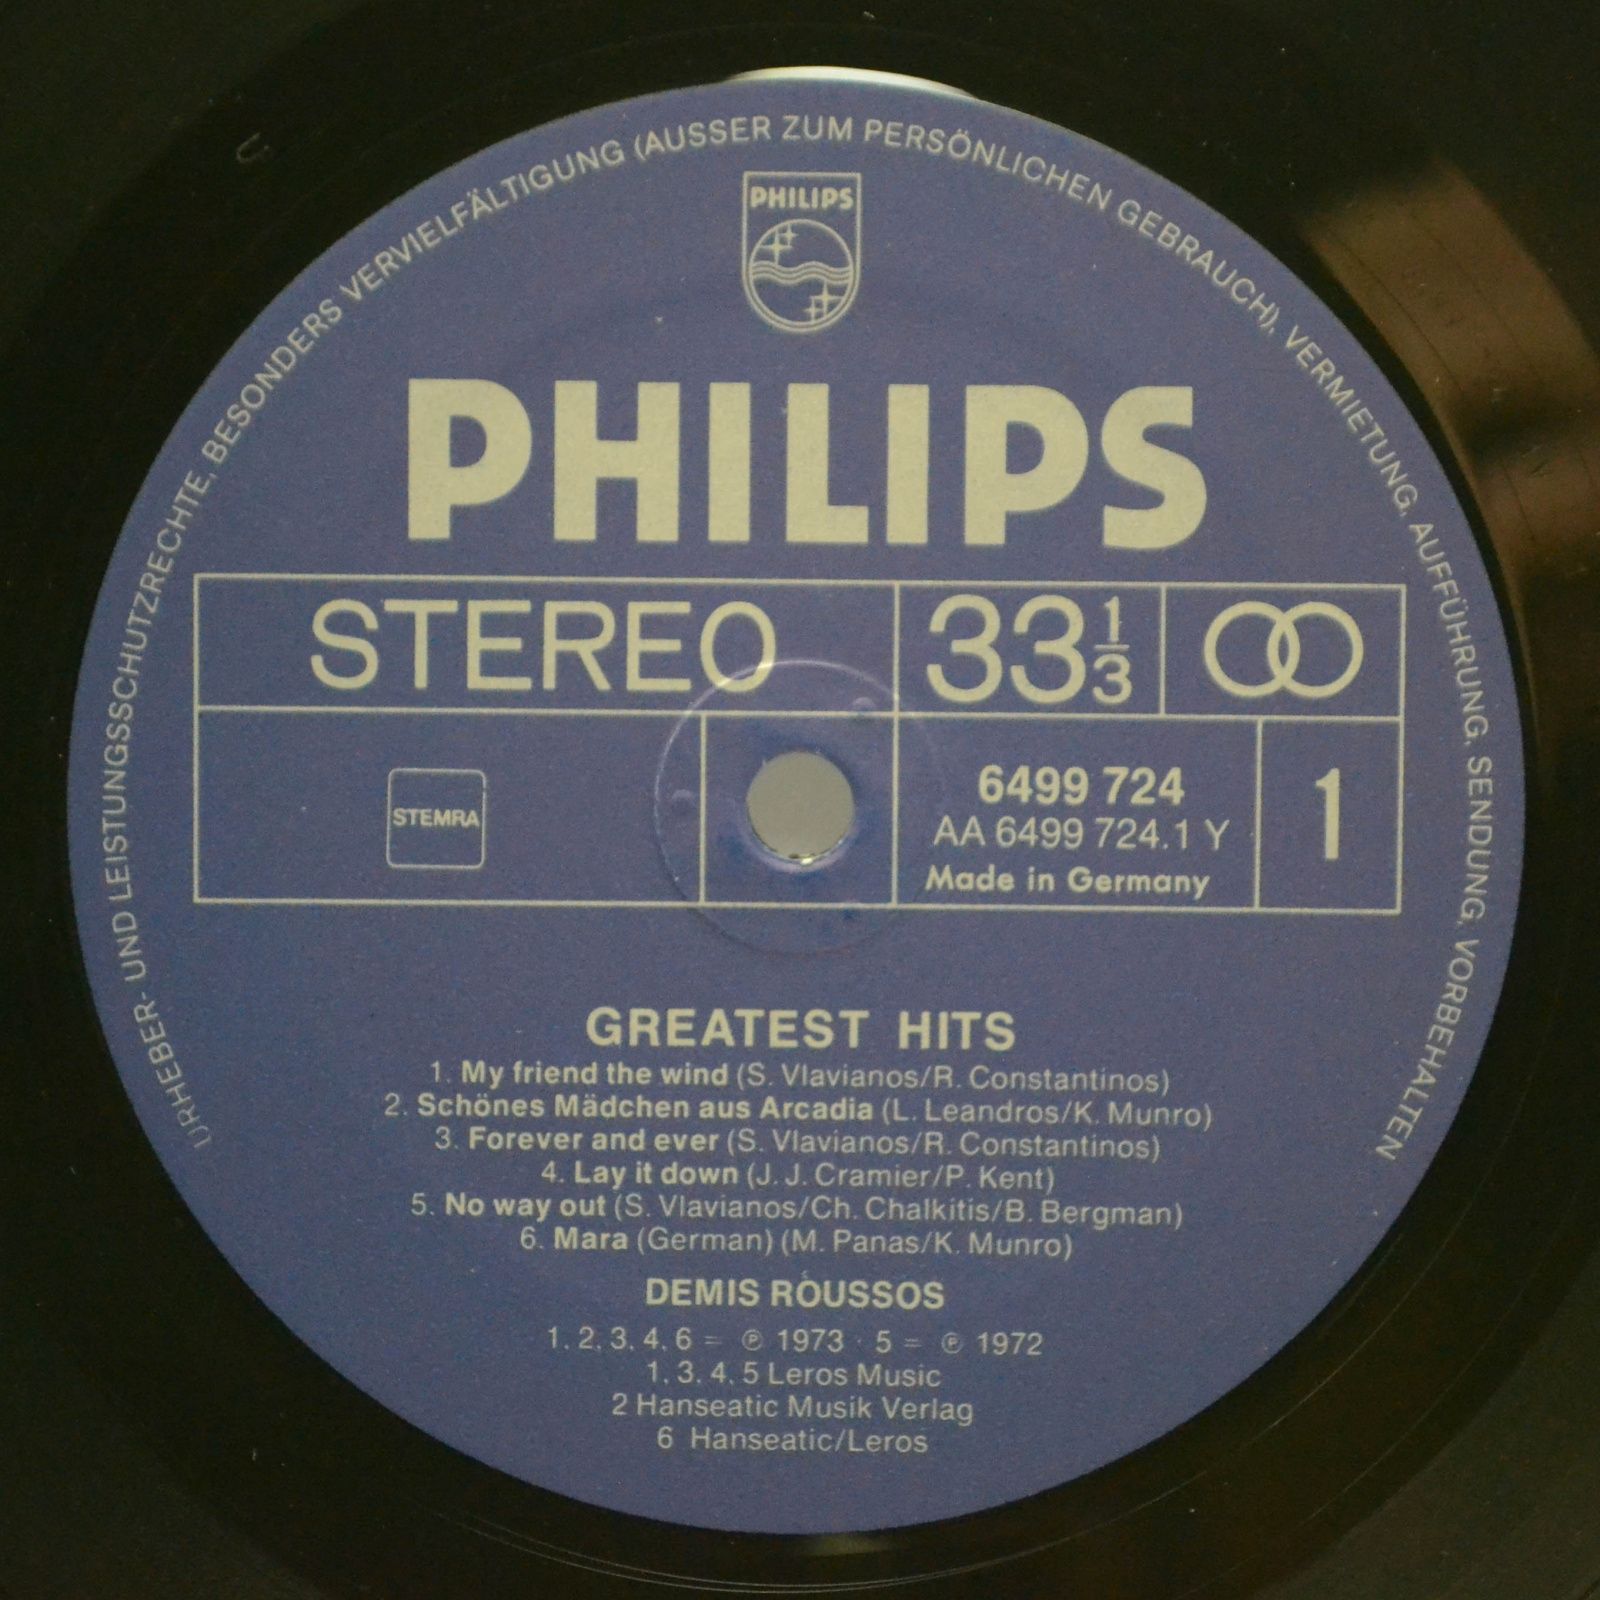 Demis Roussos — Greatest Hits, 1973